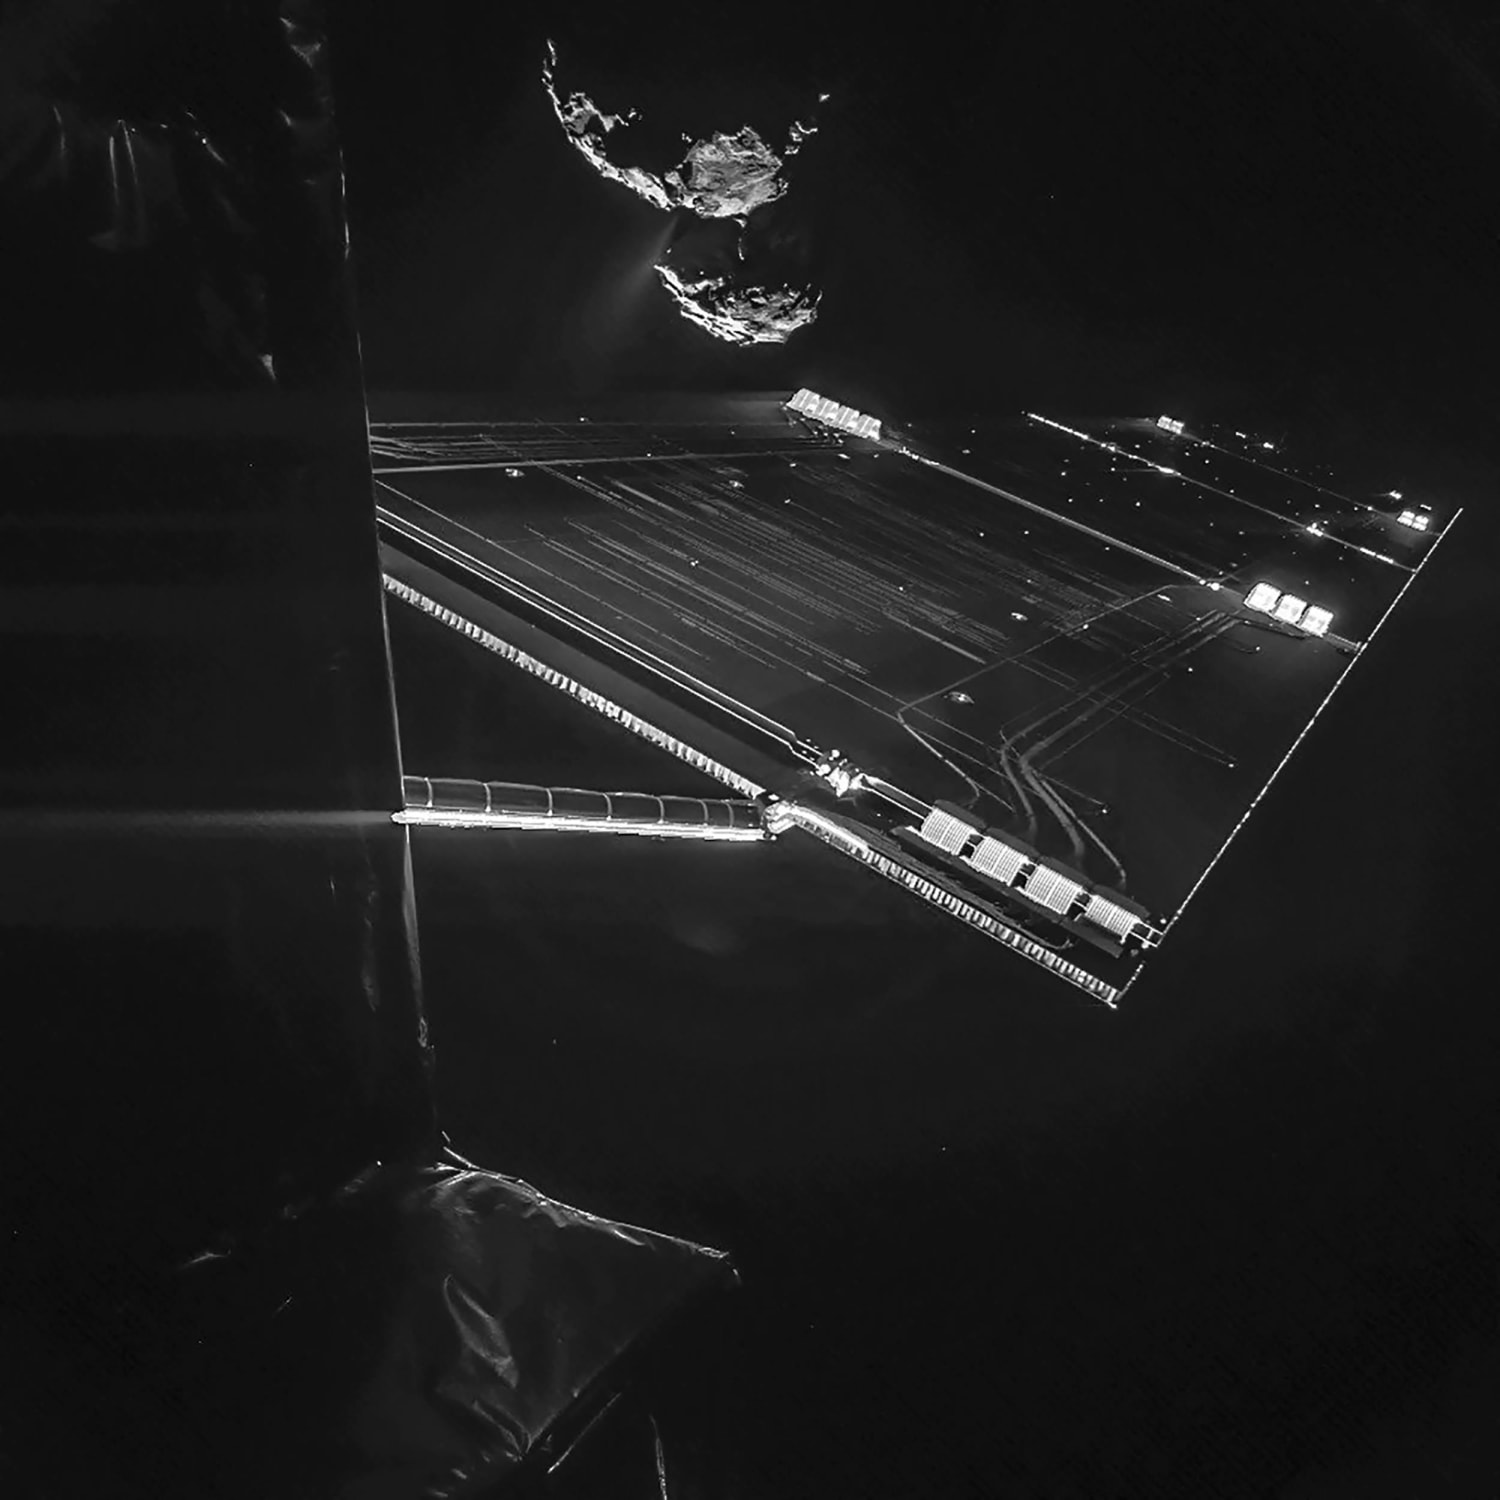 Rosetta Probe Snaps Selfie With Comet Before Historic Landing